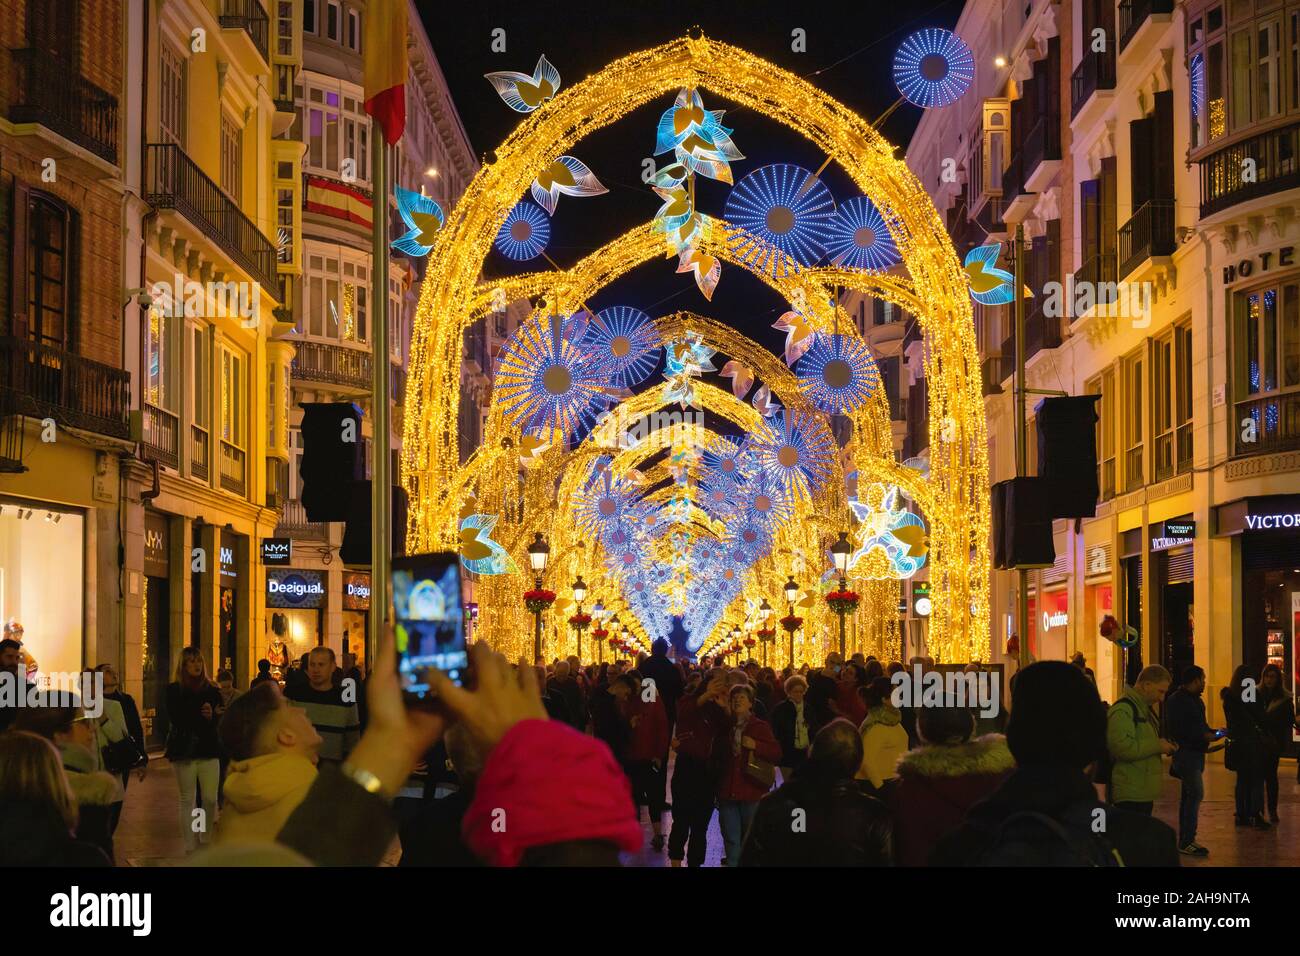 La foule admirant les lumières de la rue Noël afficher dans la Calle Larios, la rue principale de Malaga, Costa del Sol, la province de Malaga, au sud de l'Espagne. Banque D'Images